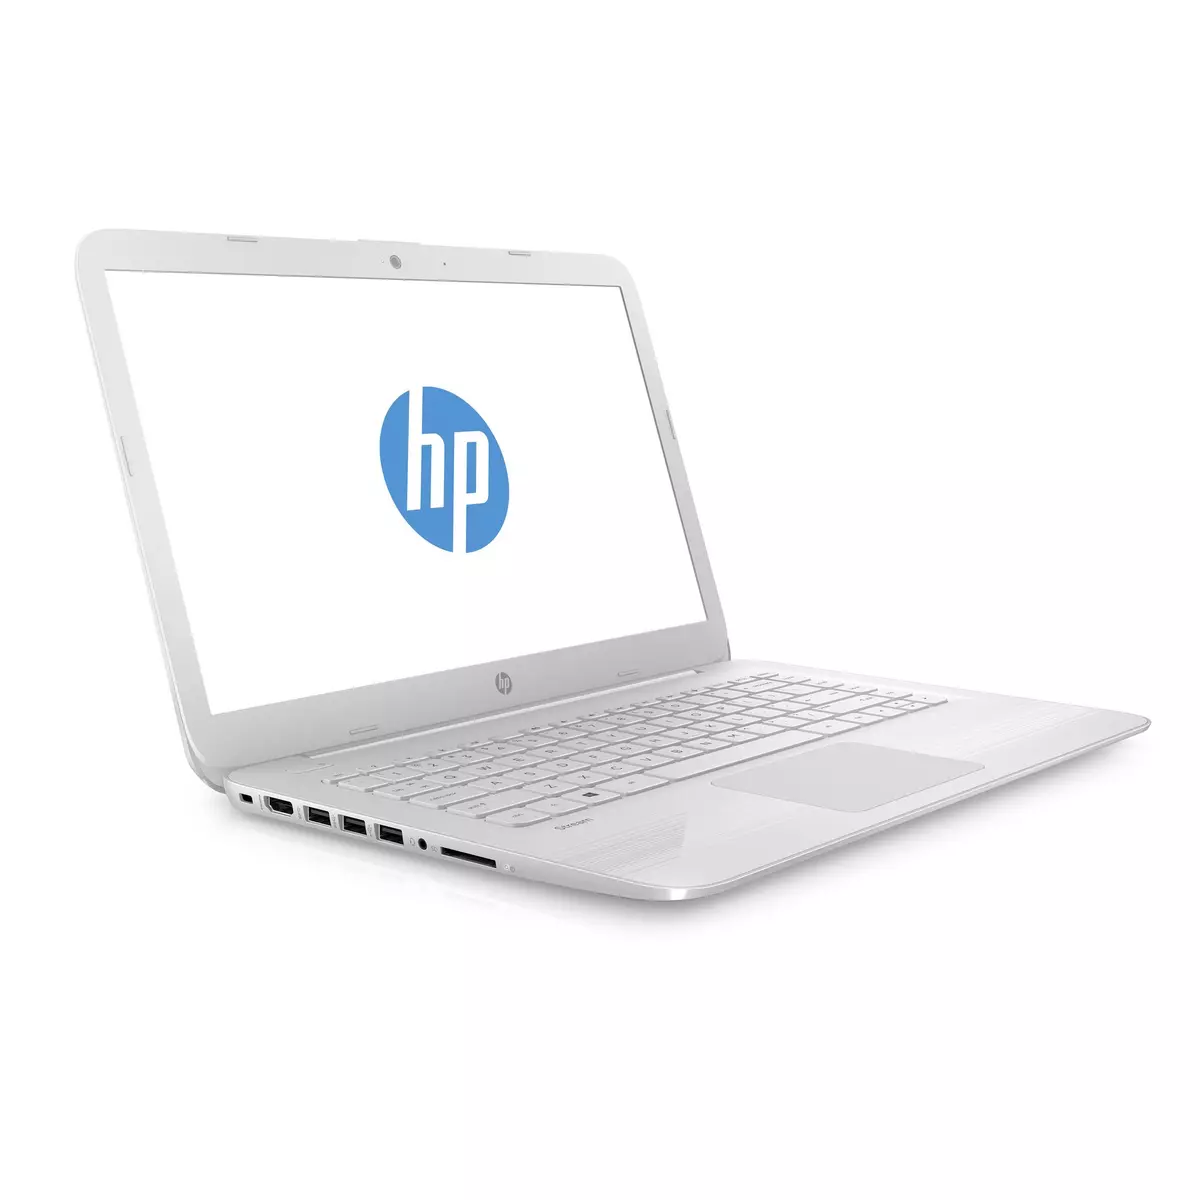 HP Ordinateur portable Stream Laptop 14-ax001nf - Blanc - Office 365 intégré